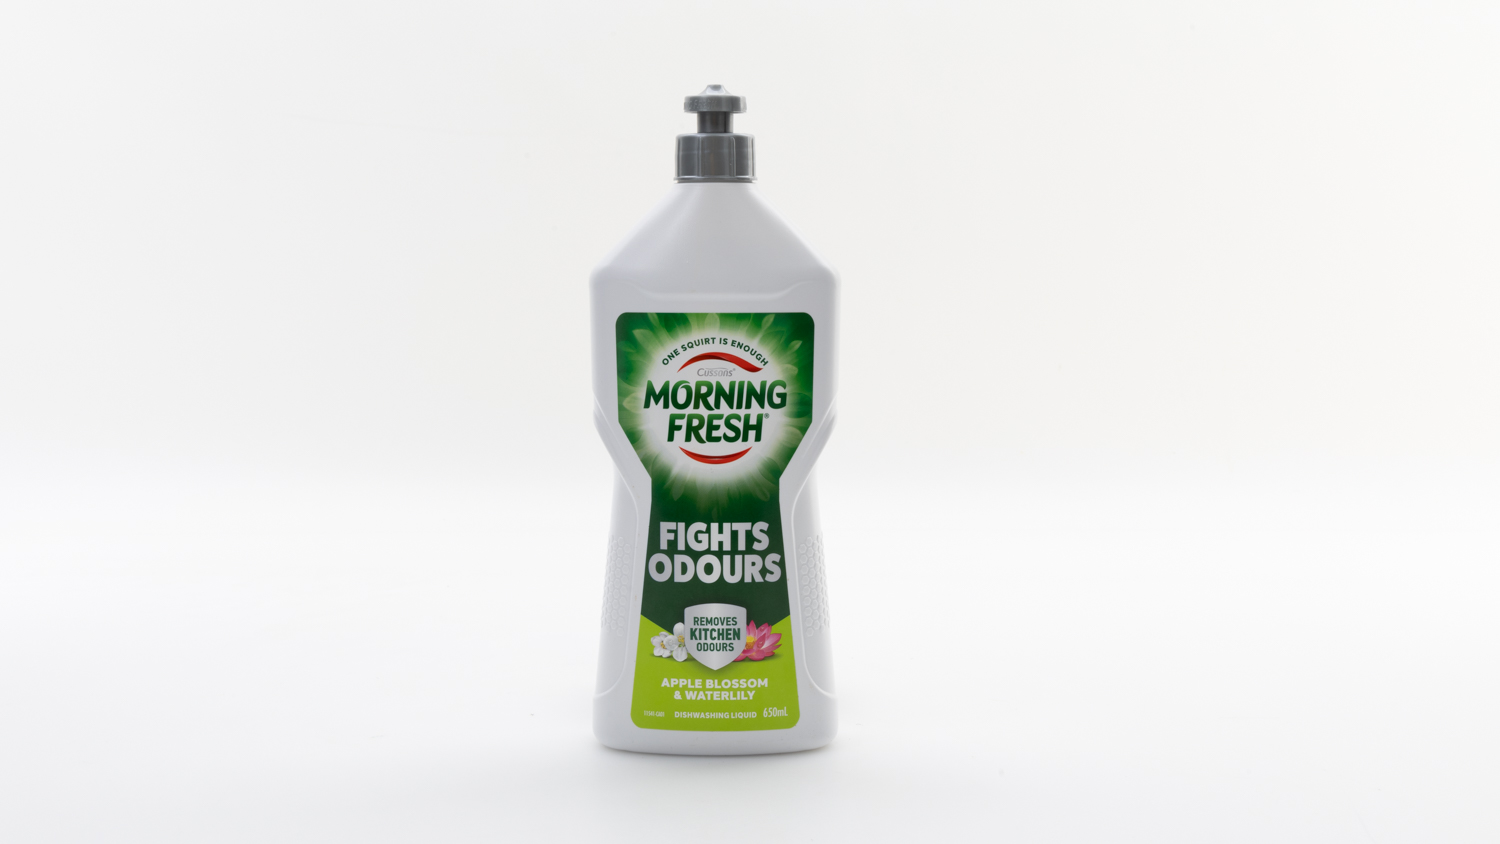 Morning Fresh Fights Odours Dishwashing Liquid carousel image